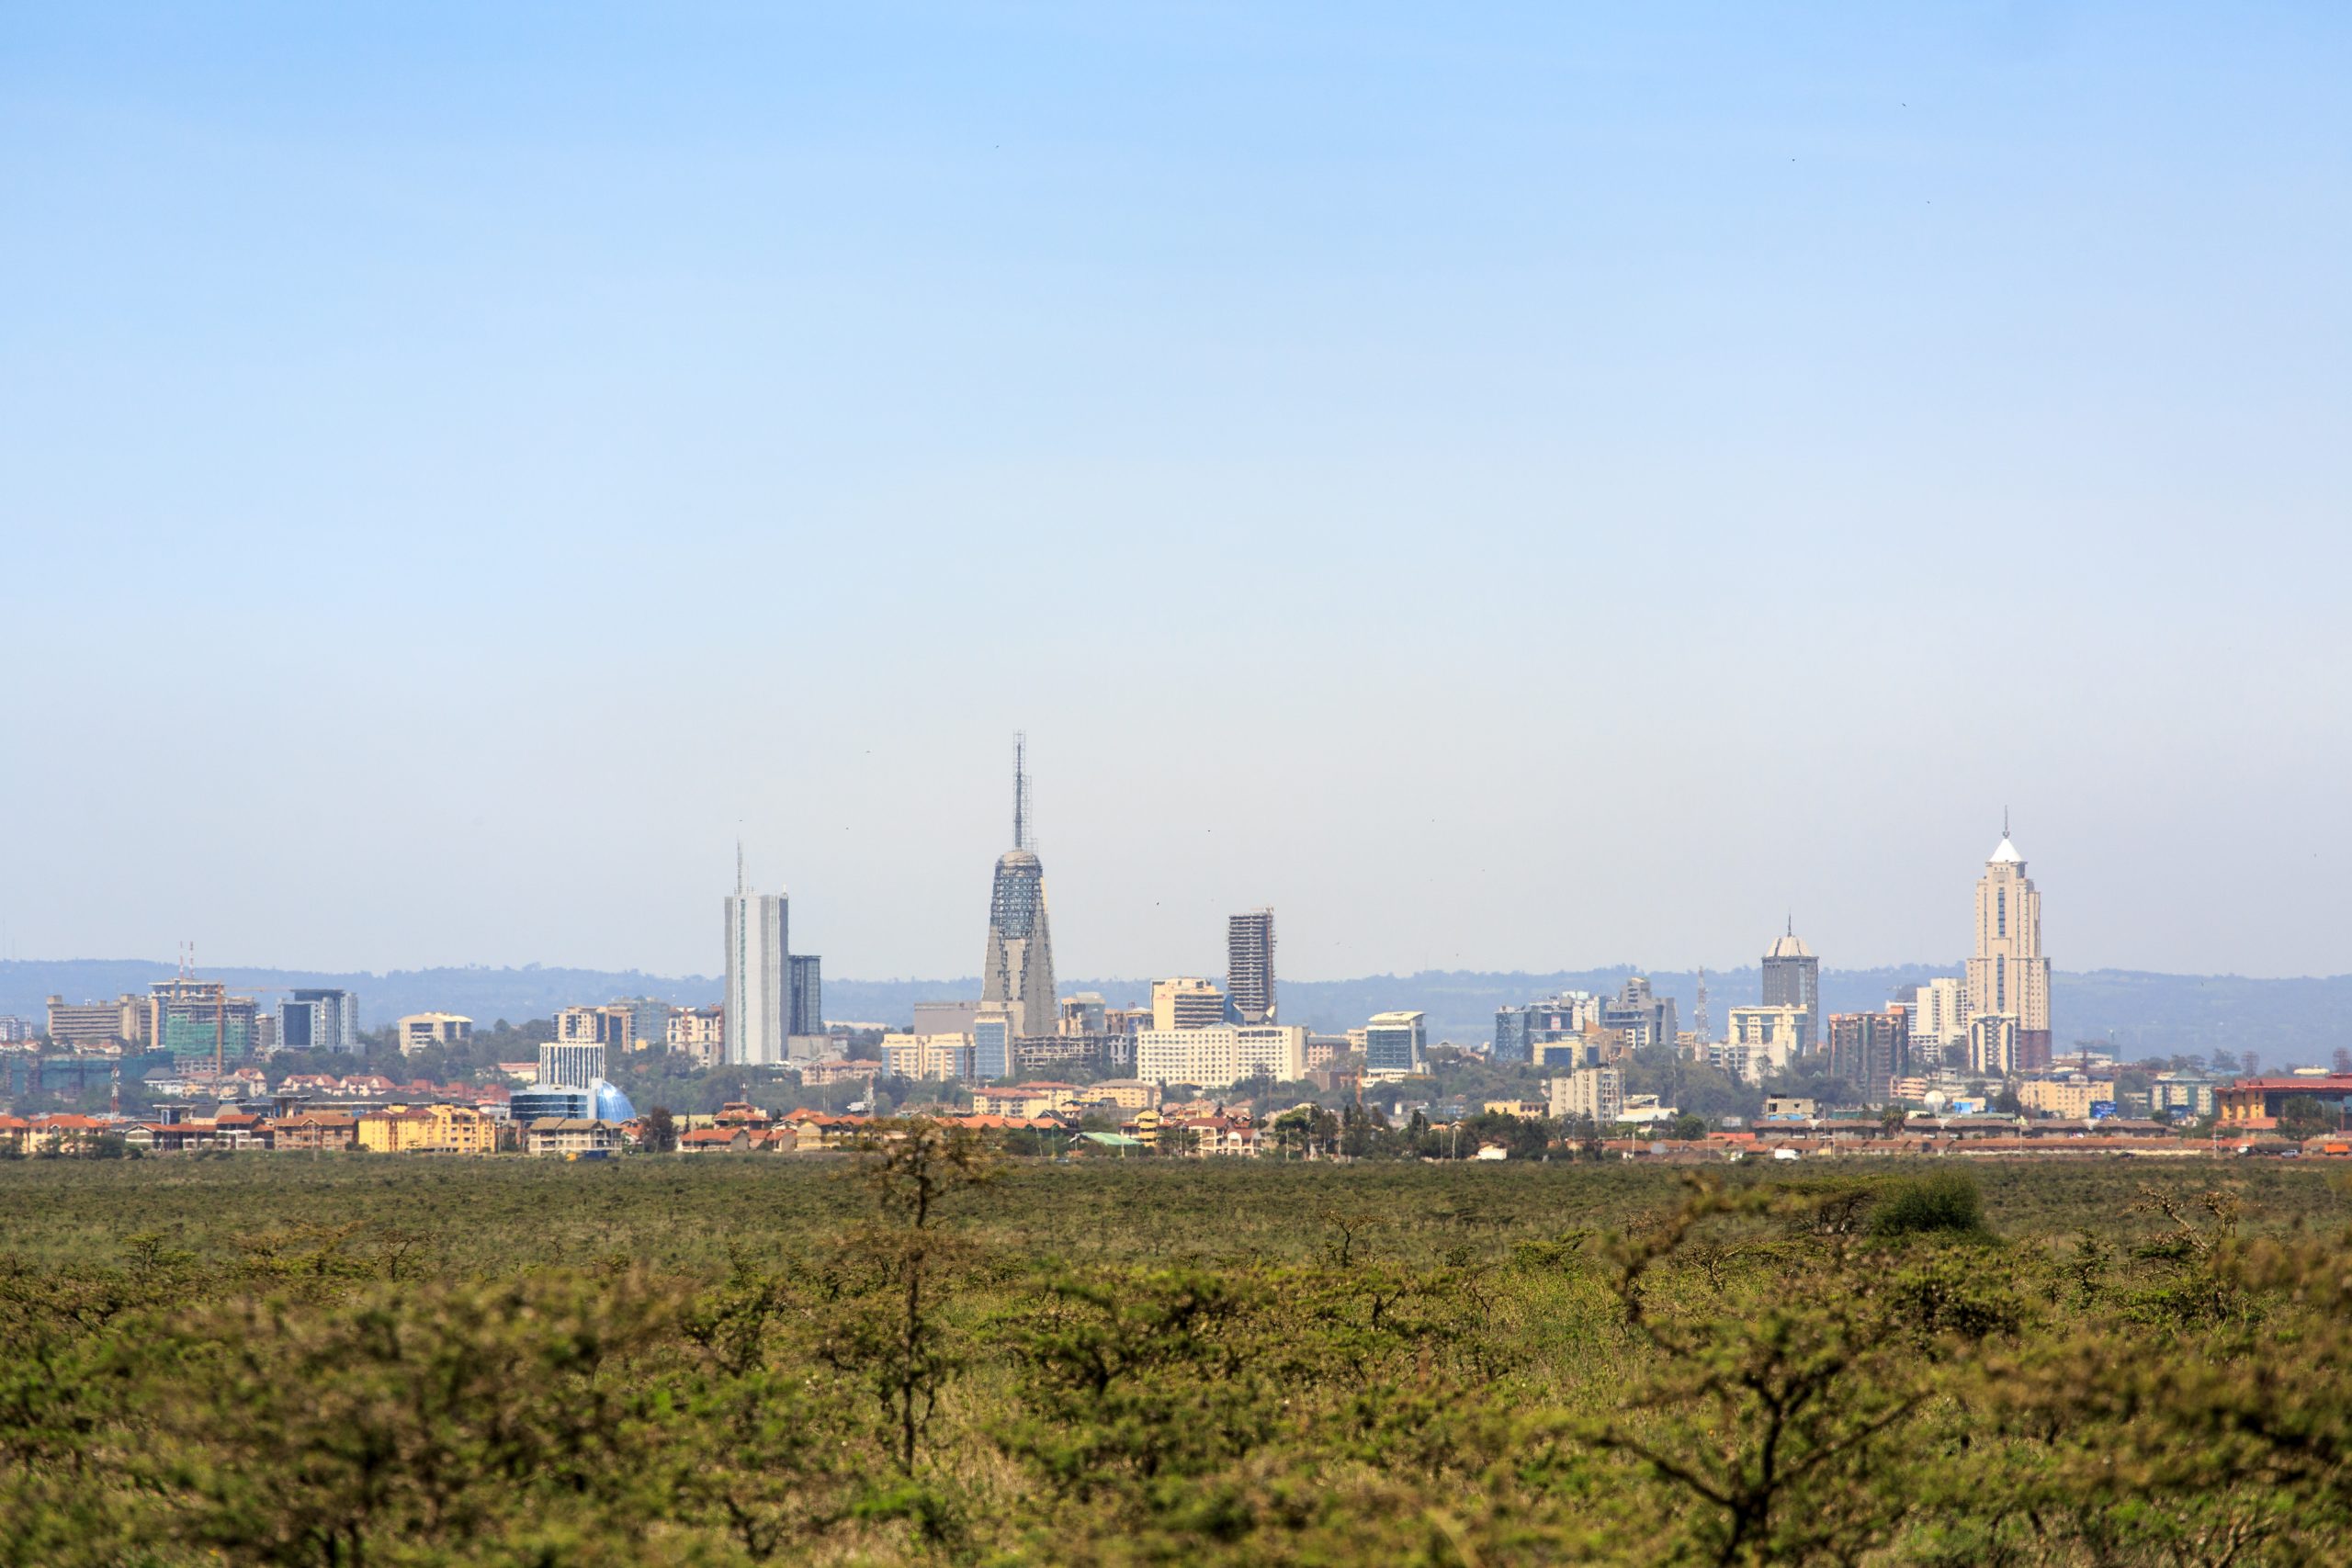 Modern Nairobi cityscape - capital city of Kenya, East Africa